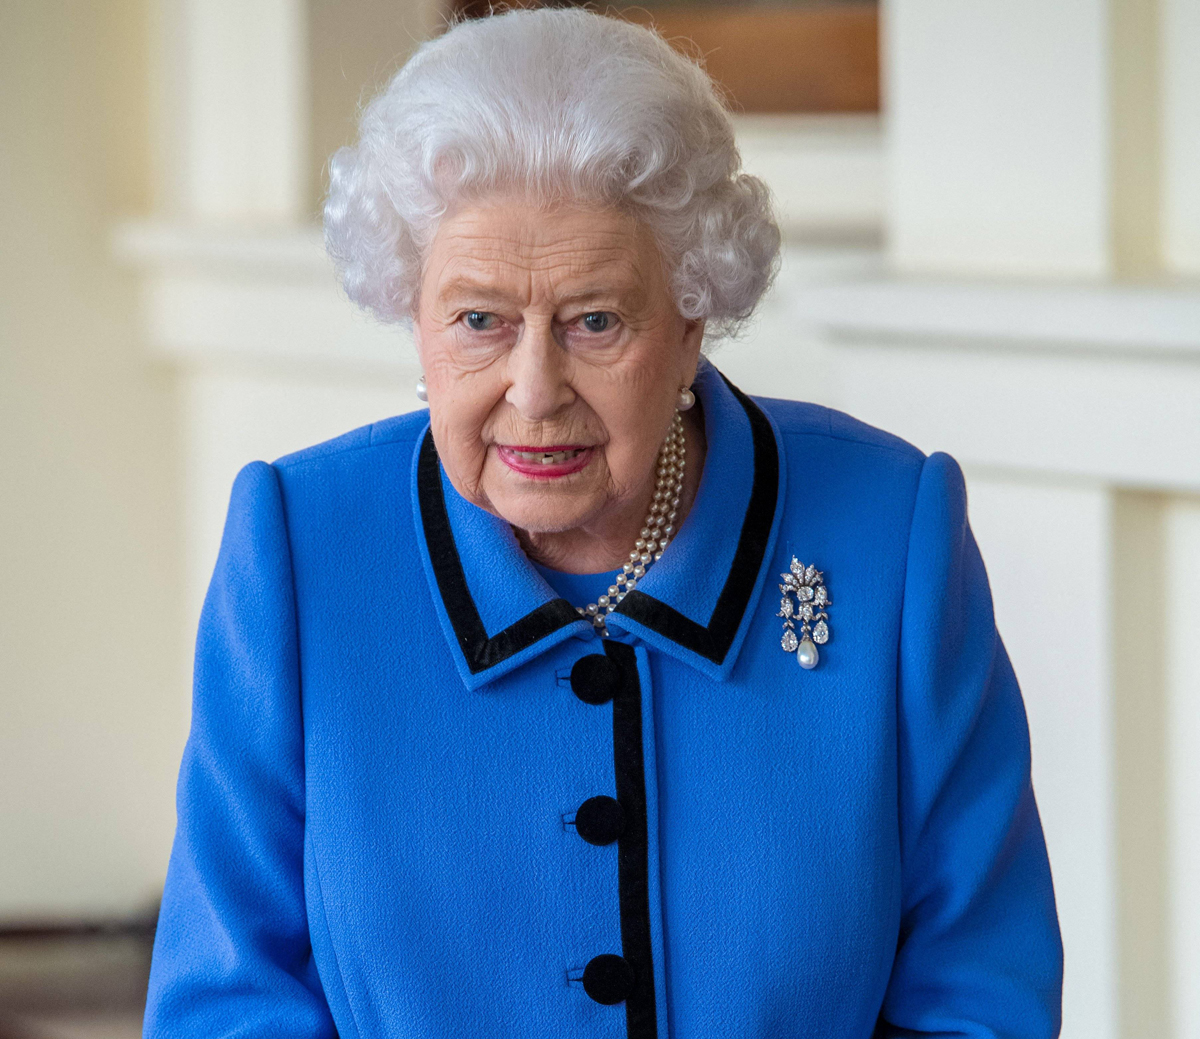 #Queen Elizabeth II Was Secretly Battling Bone Marrow Cancer Before Her Death, New Book Claims